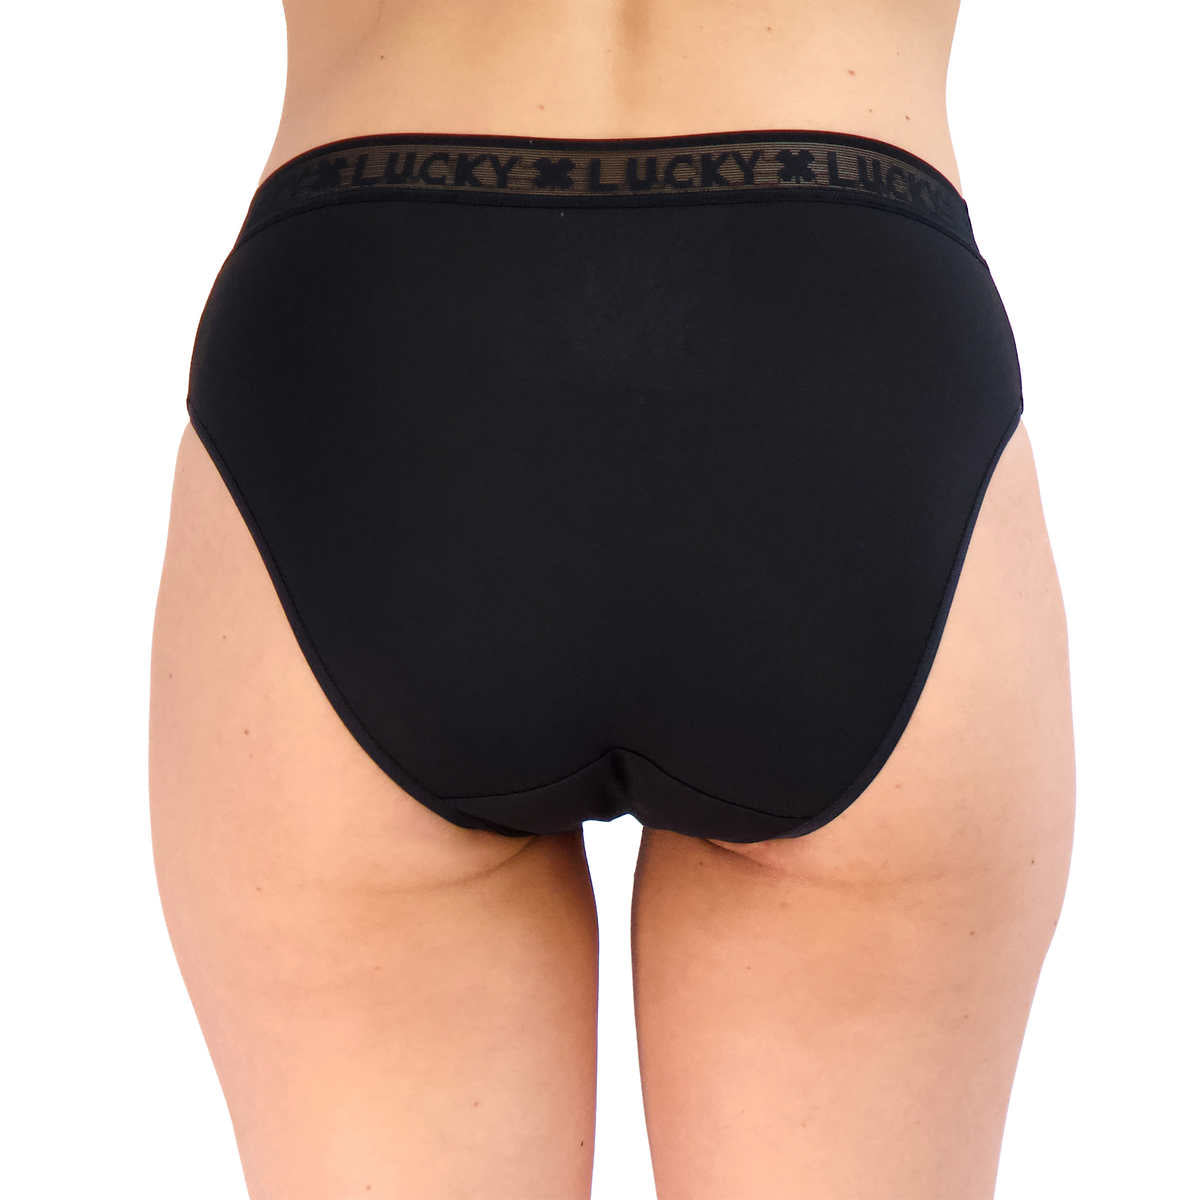 Lucky Brand Girls Underwear Three Pack New Large 12-14 Hipster Brief